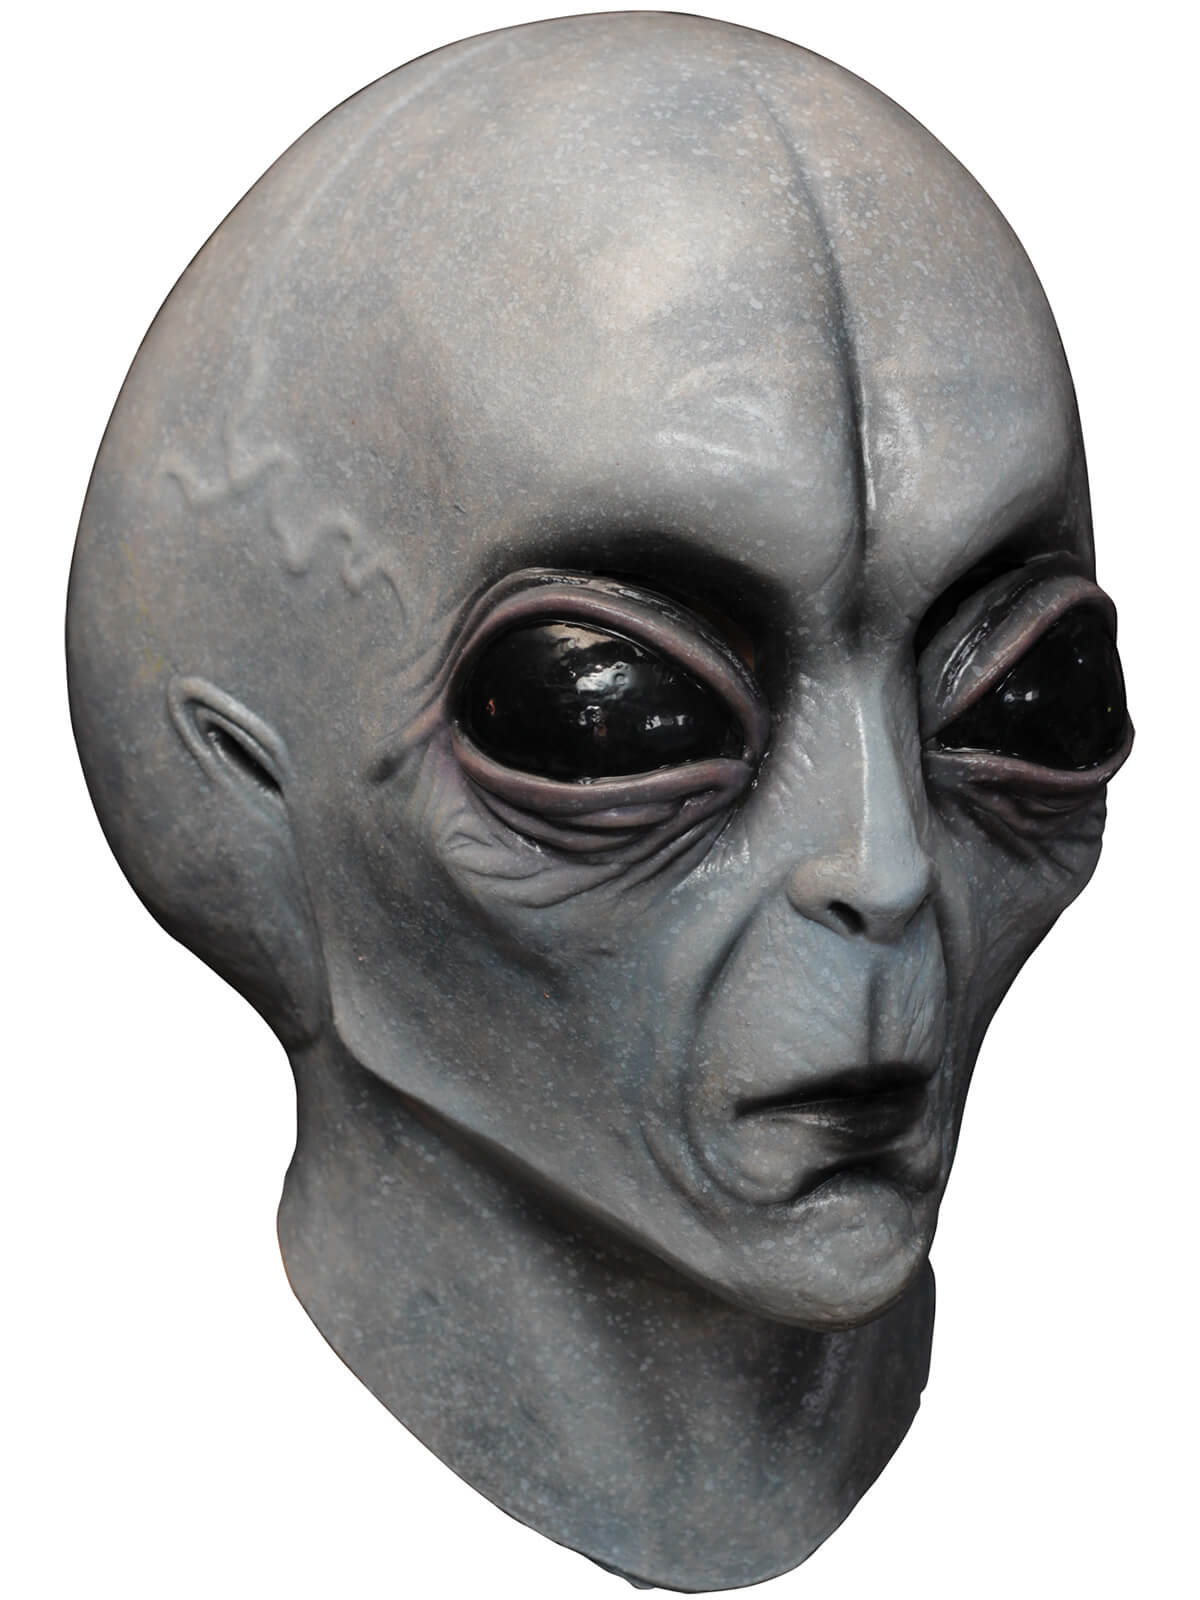 Area 51 Overhead Mask